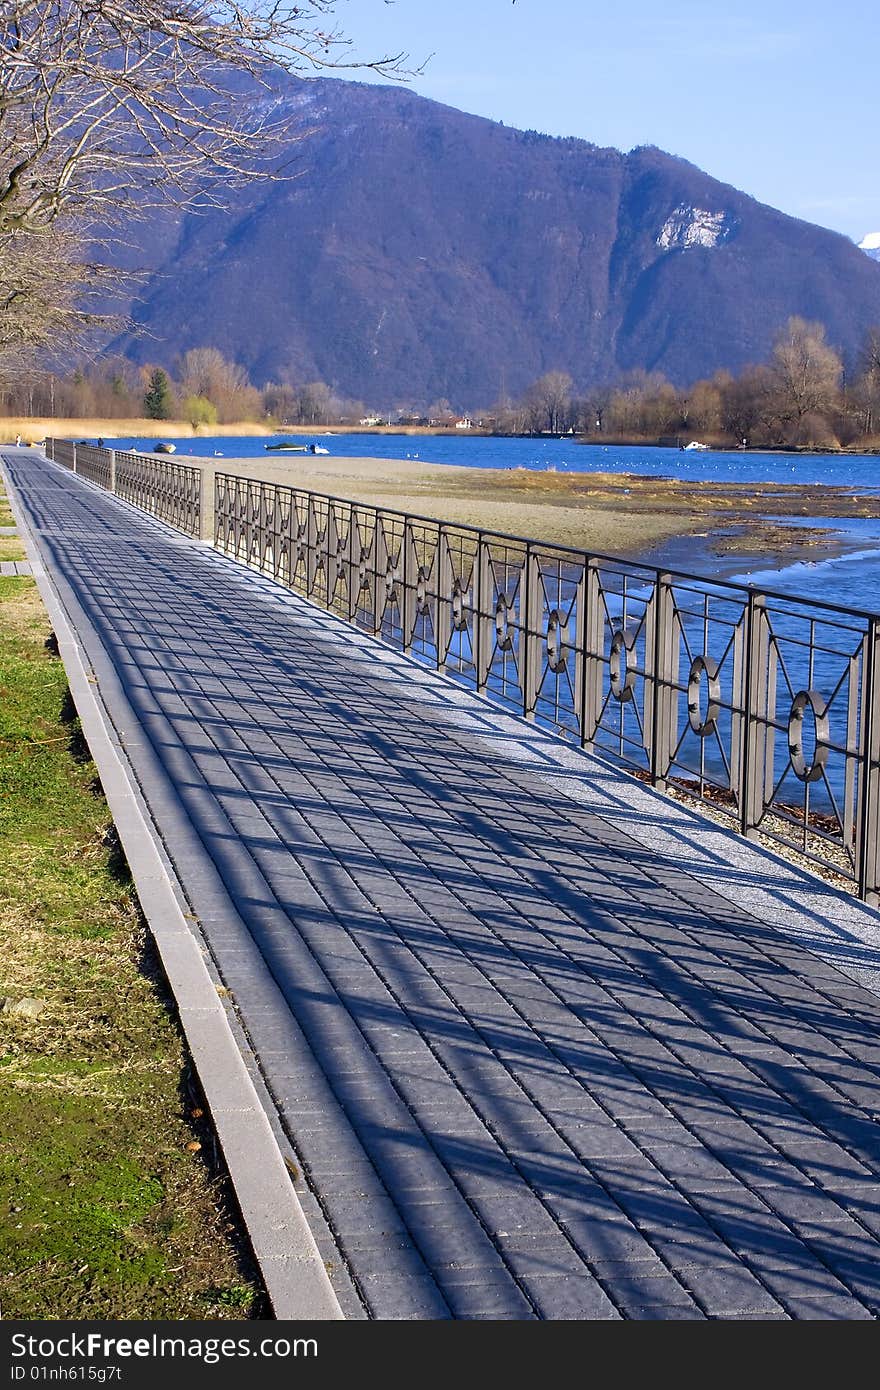 Sidewalk along the lake with railing